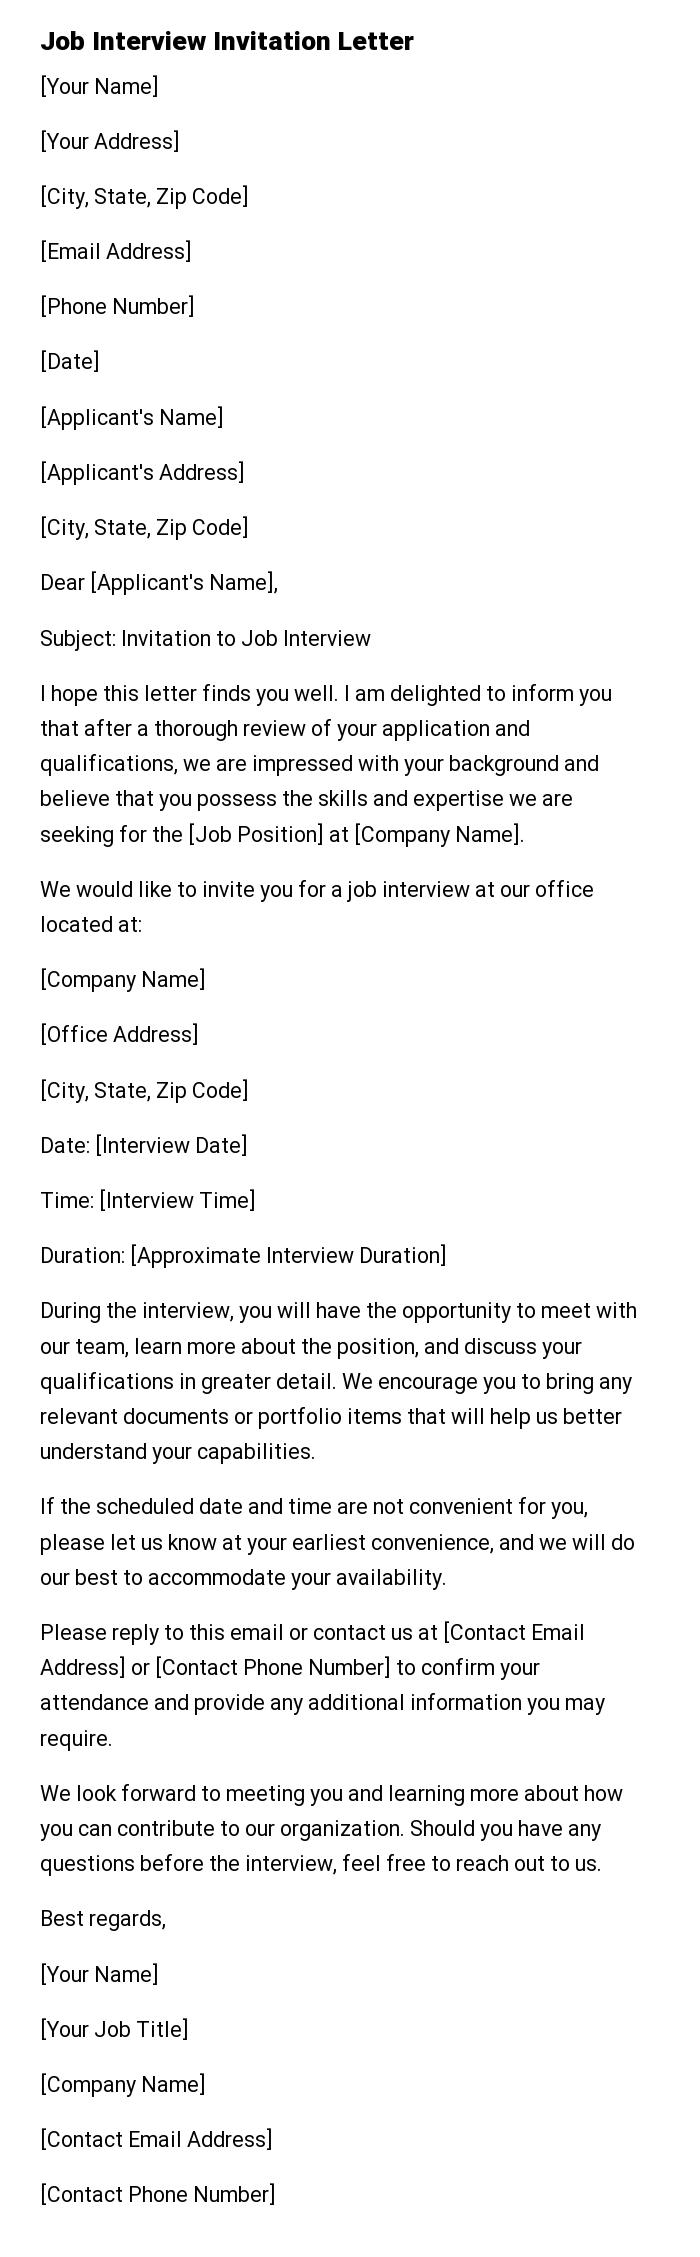 Job Interview Invitation Letter